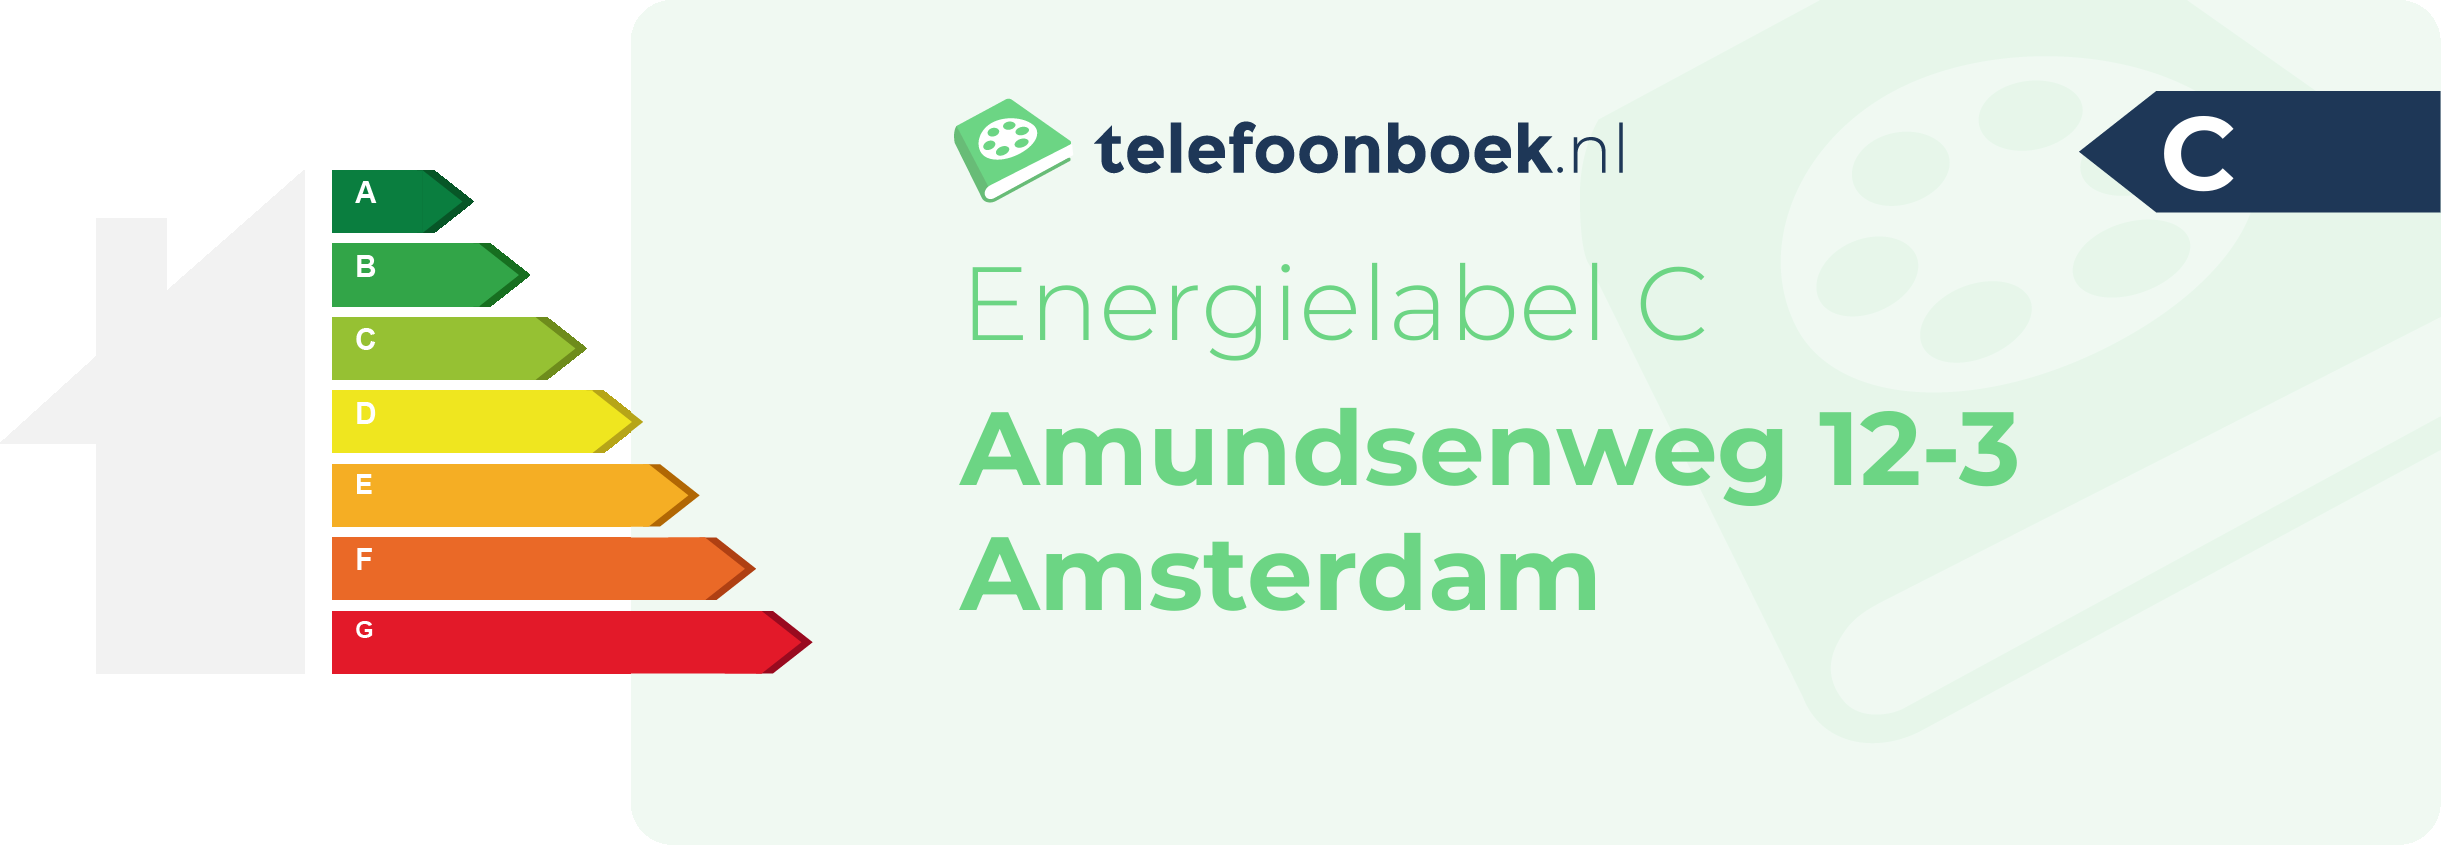 Energielabel Amundsenweg 12-3 Amsterdam